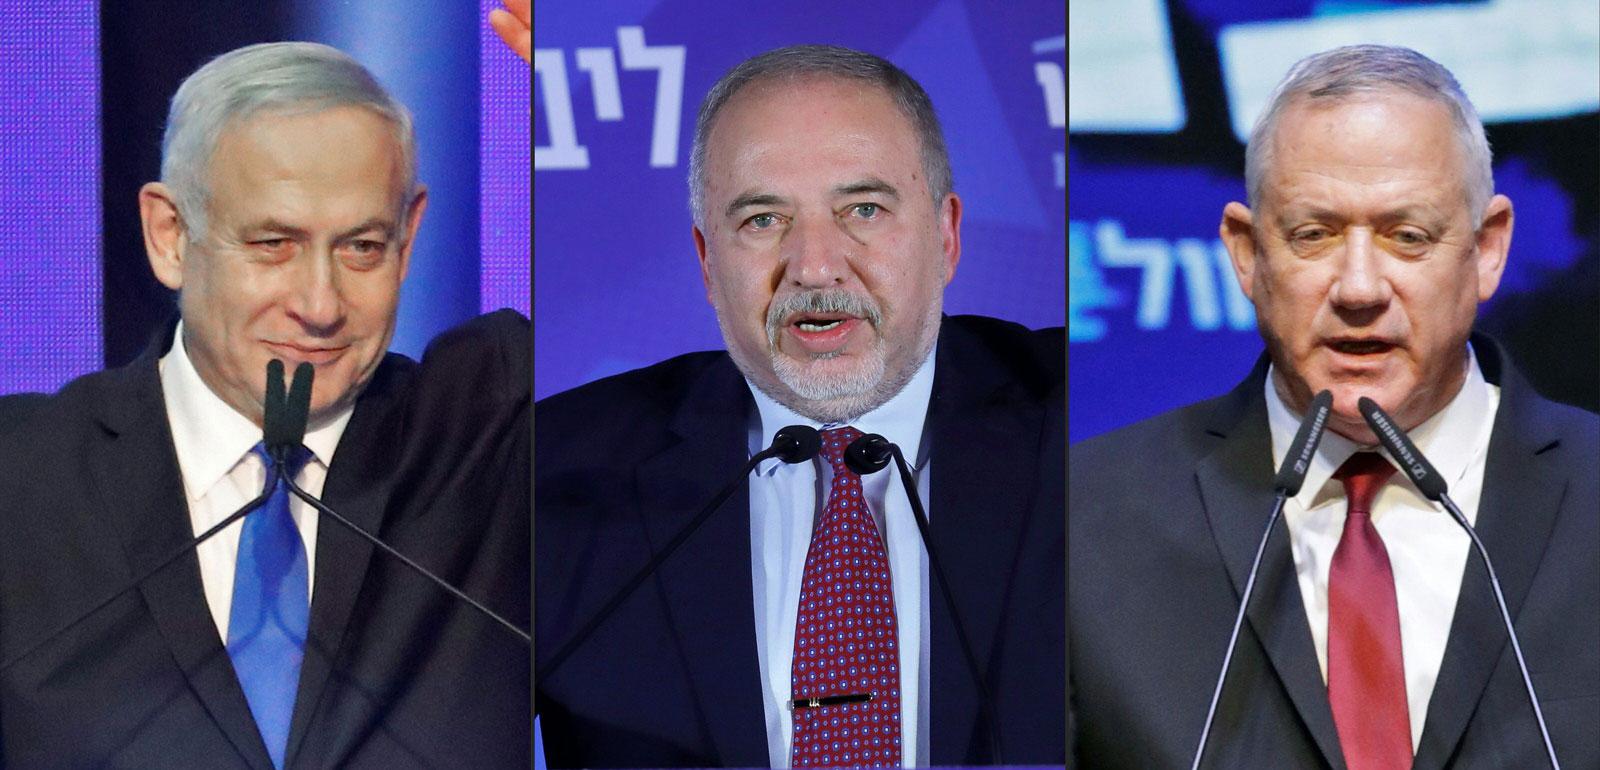 (L to R): Israeli Prime Minister Benjamin Netanyahu, Avigdor Lieberman the leader of the Israeli nationalist Yisrael Beiteinu party, and retired General Benny Gantz